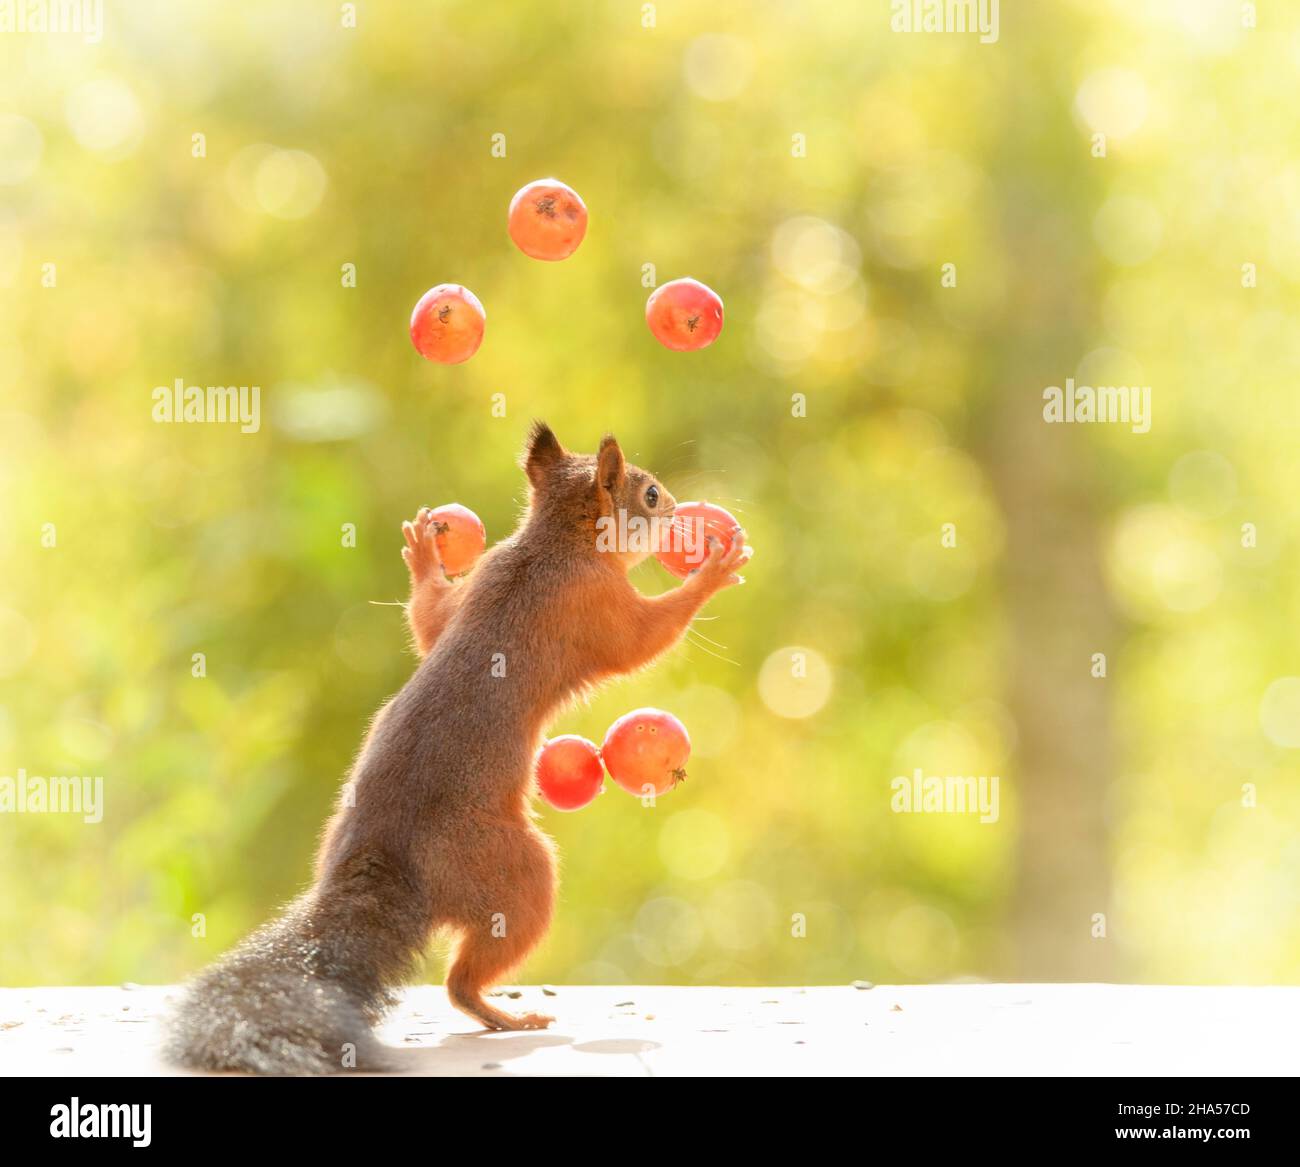 Eichhörnchen jonglieren mit Äpfel Stockfoto